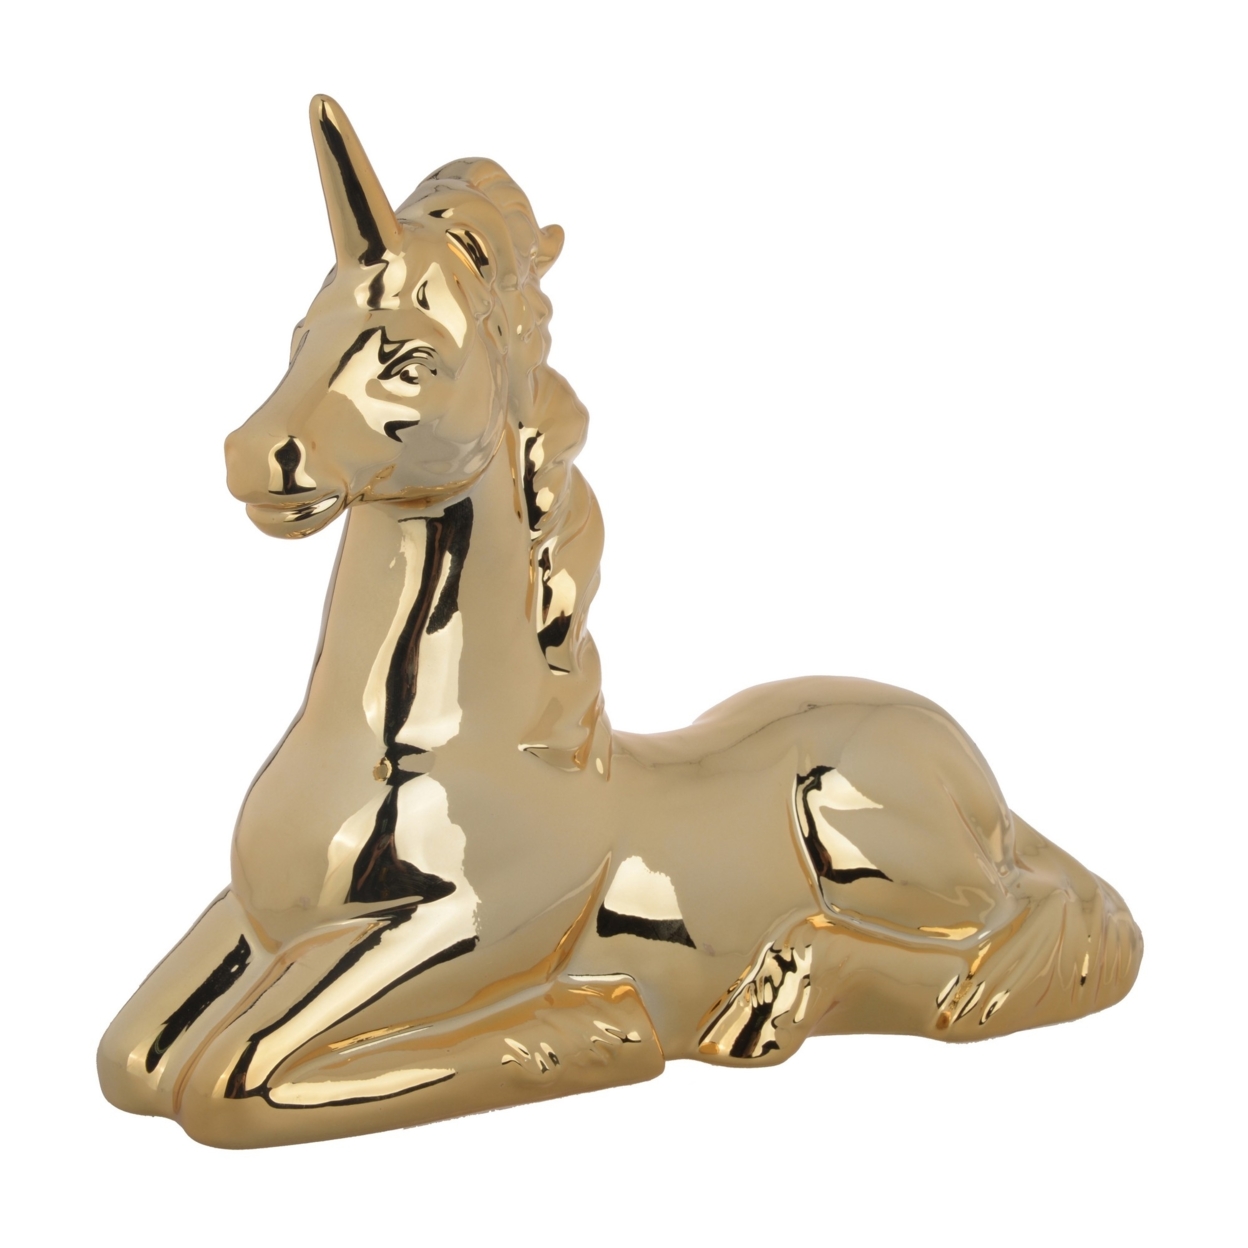 11 Inch Sitting Unicorn Figurine, Ceramic Statuette In Gold Metallic Finish- Saltoro Sherpi